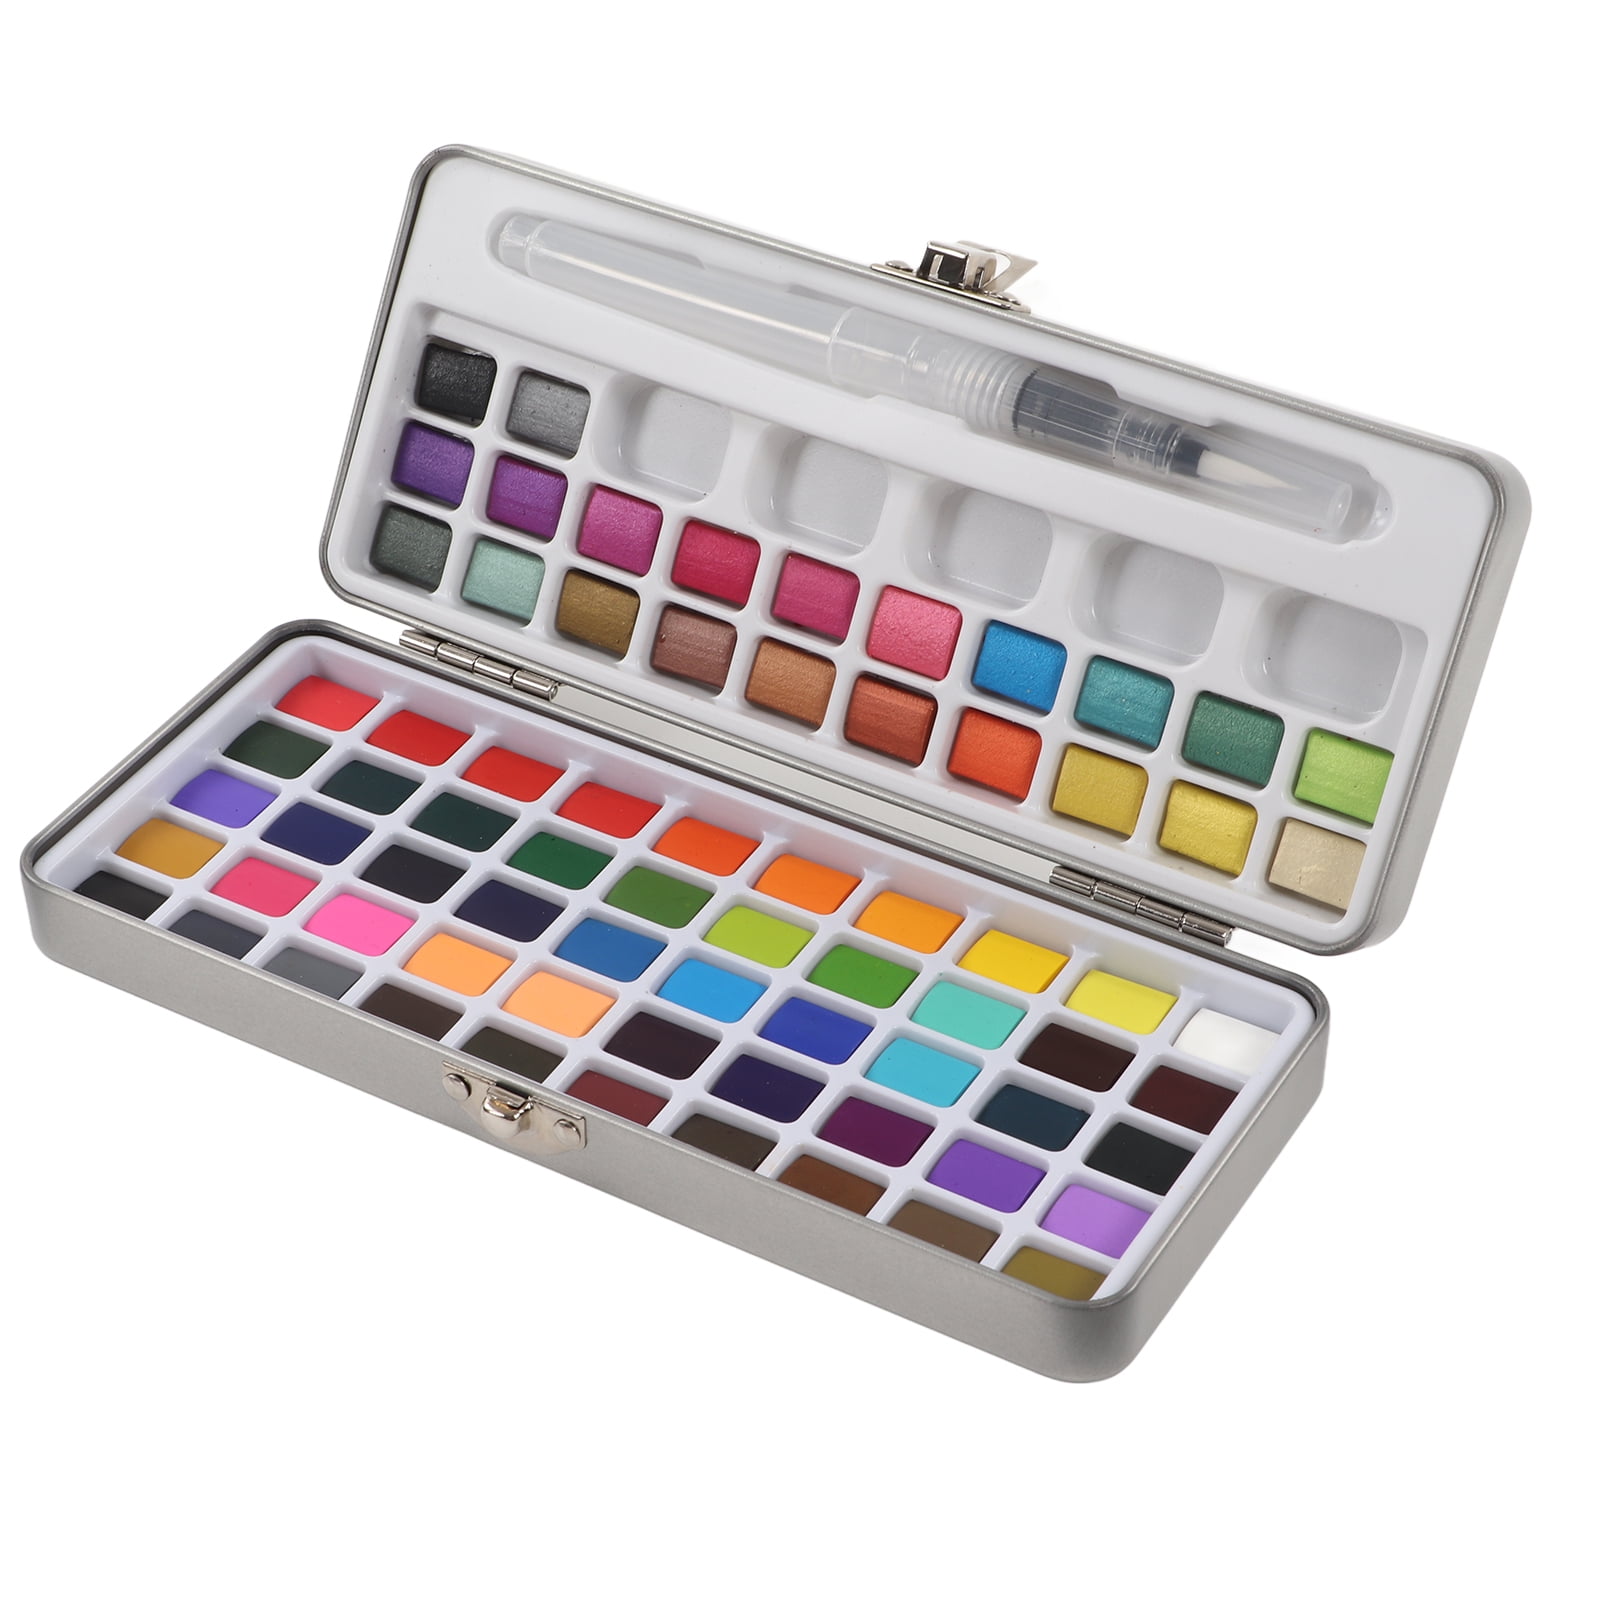 Watercolors Multicolor Watercolor Paint Set, Packaging Type: Plastic Box,  Packaging Size: 12 Pcs